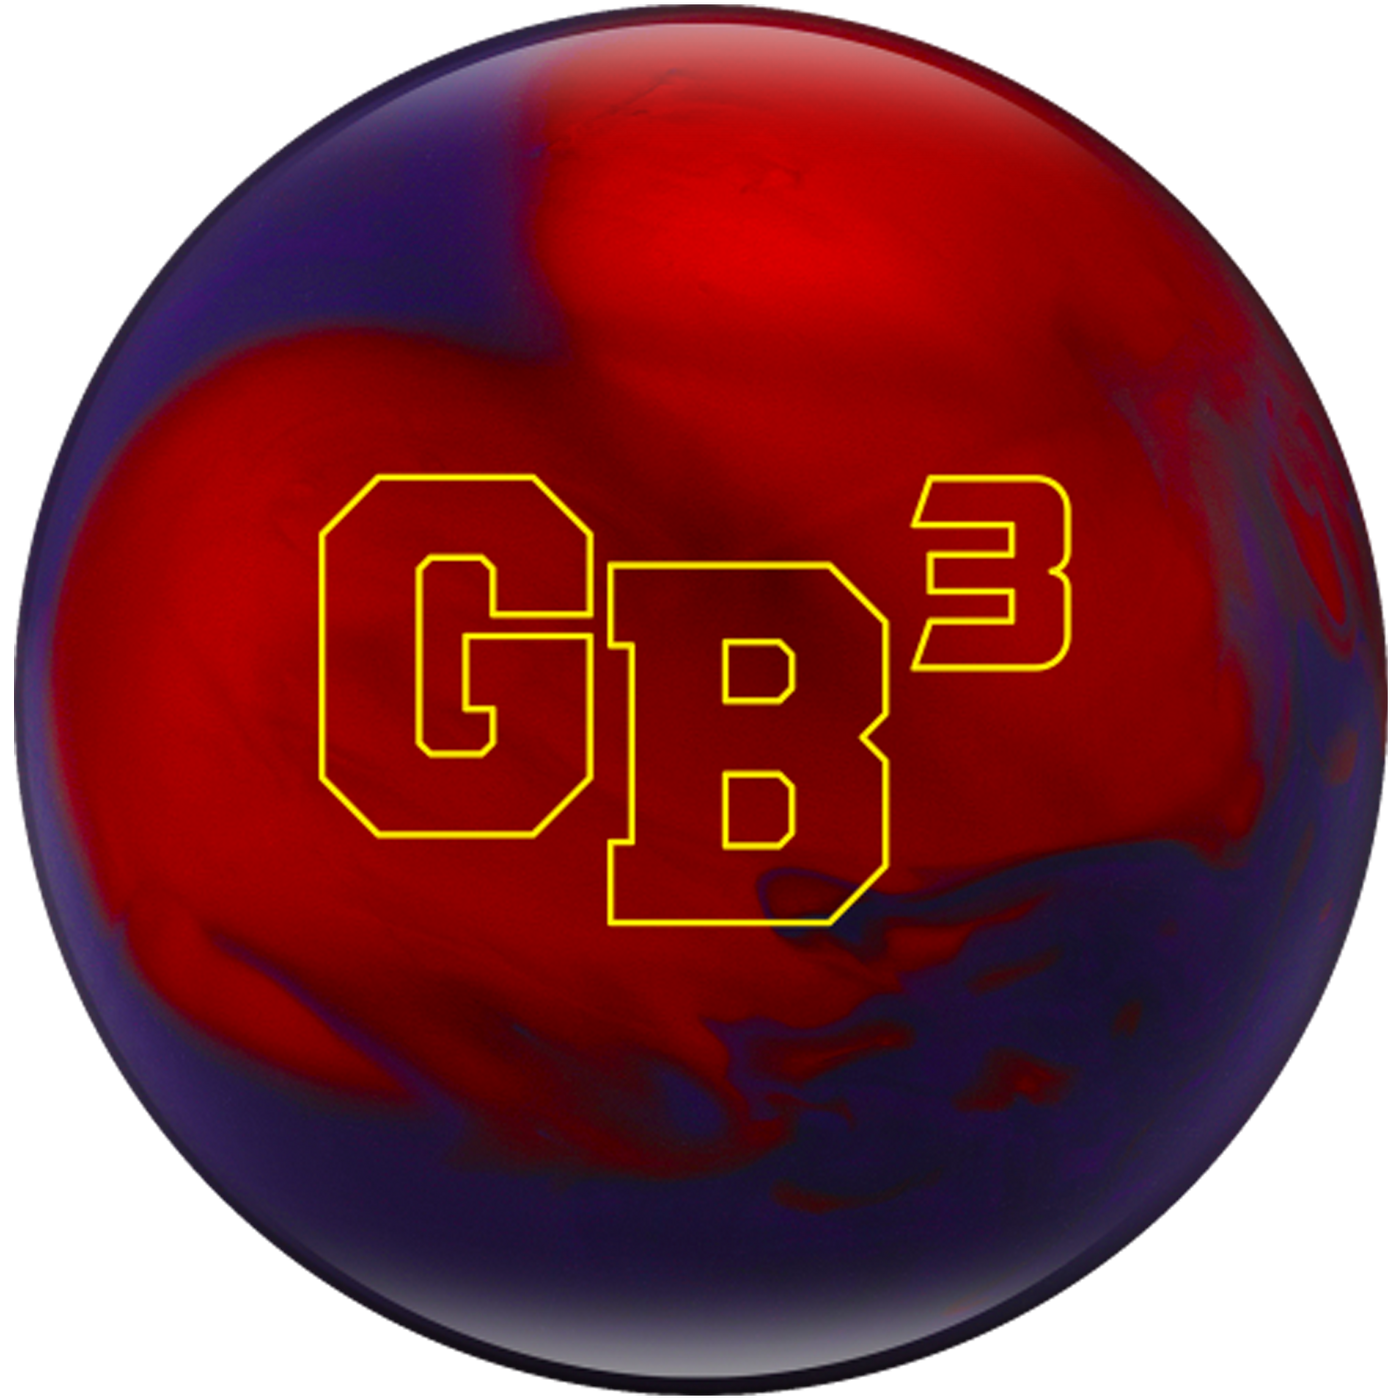 Game Breaker 3 Pearl Bowling Ball